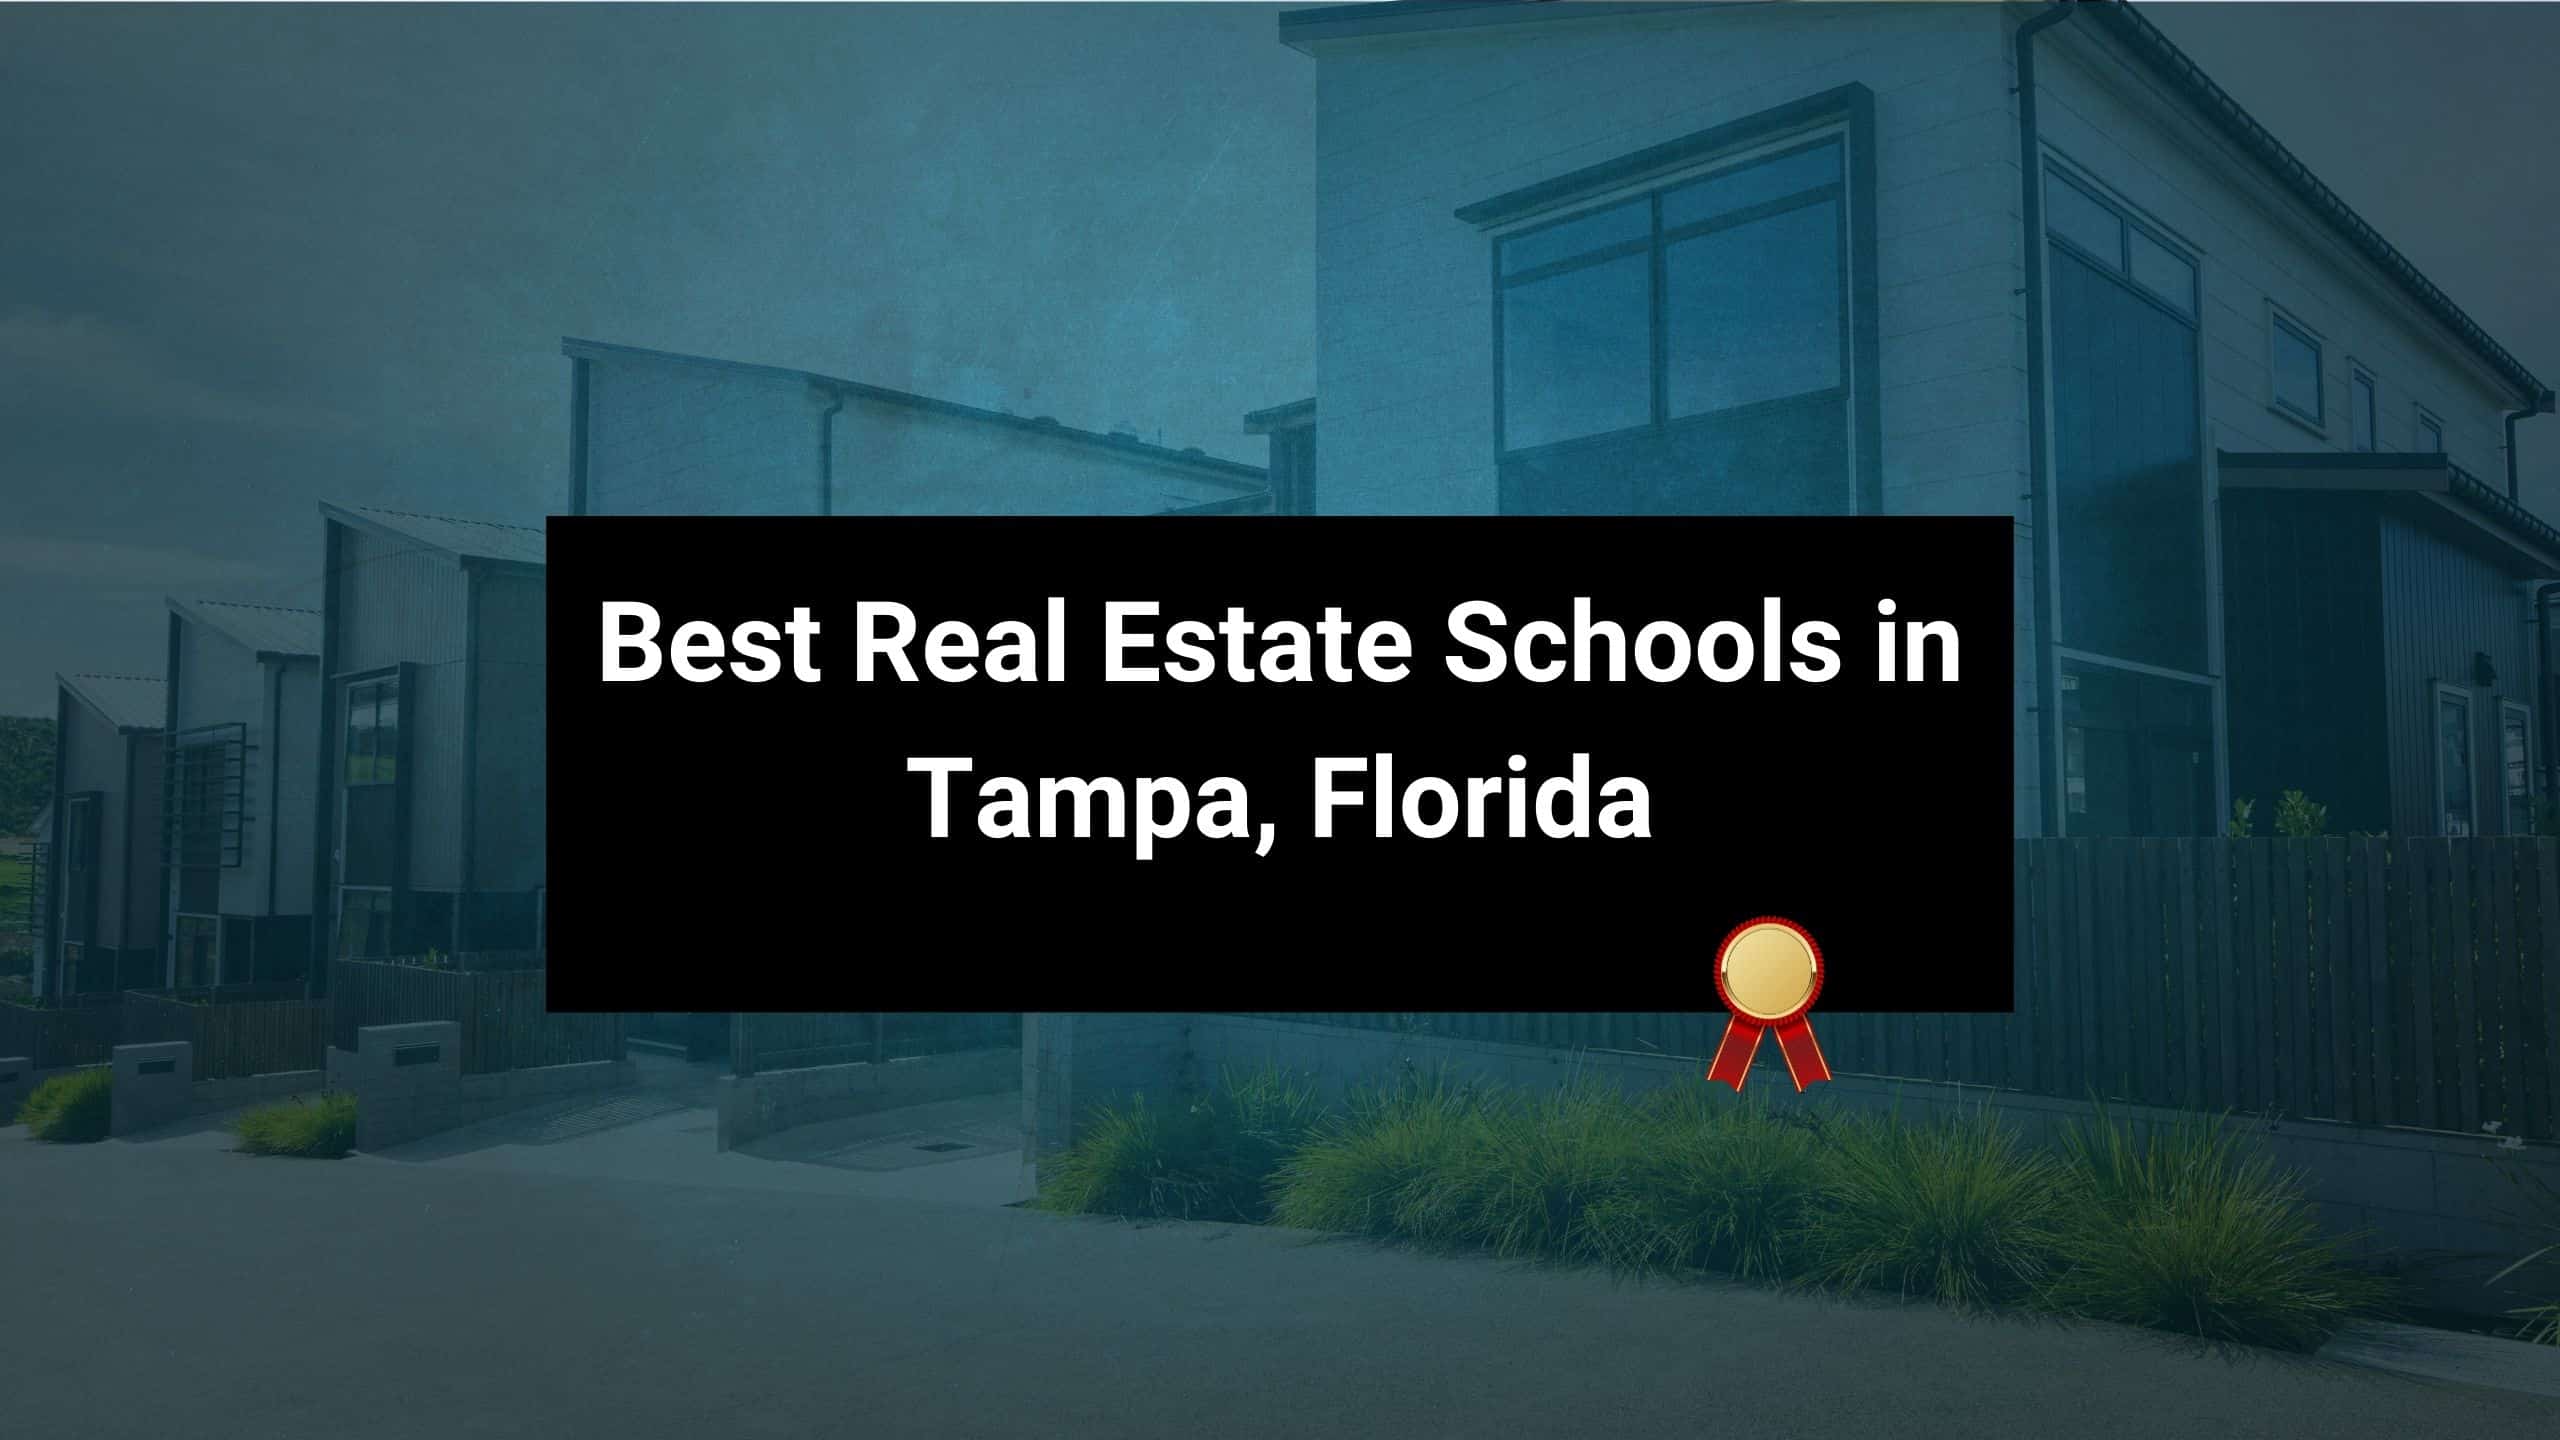 Best Real Estate Schools in Tampa, Florida Image